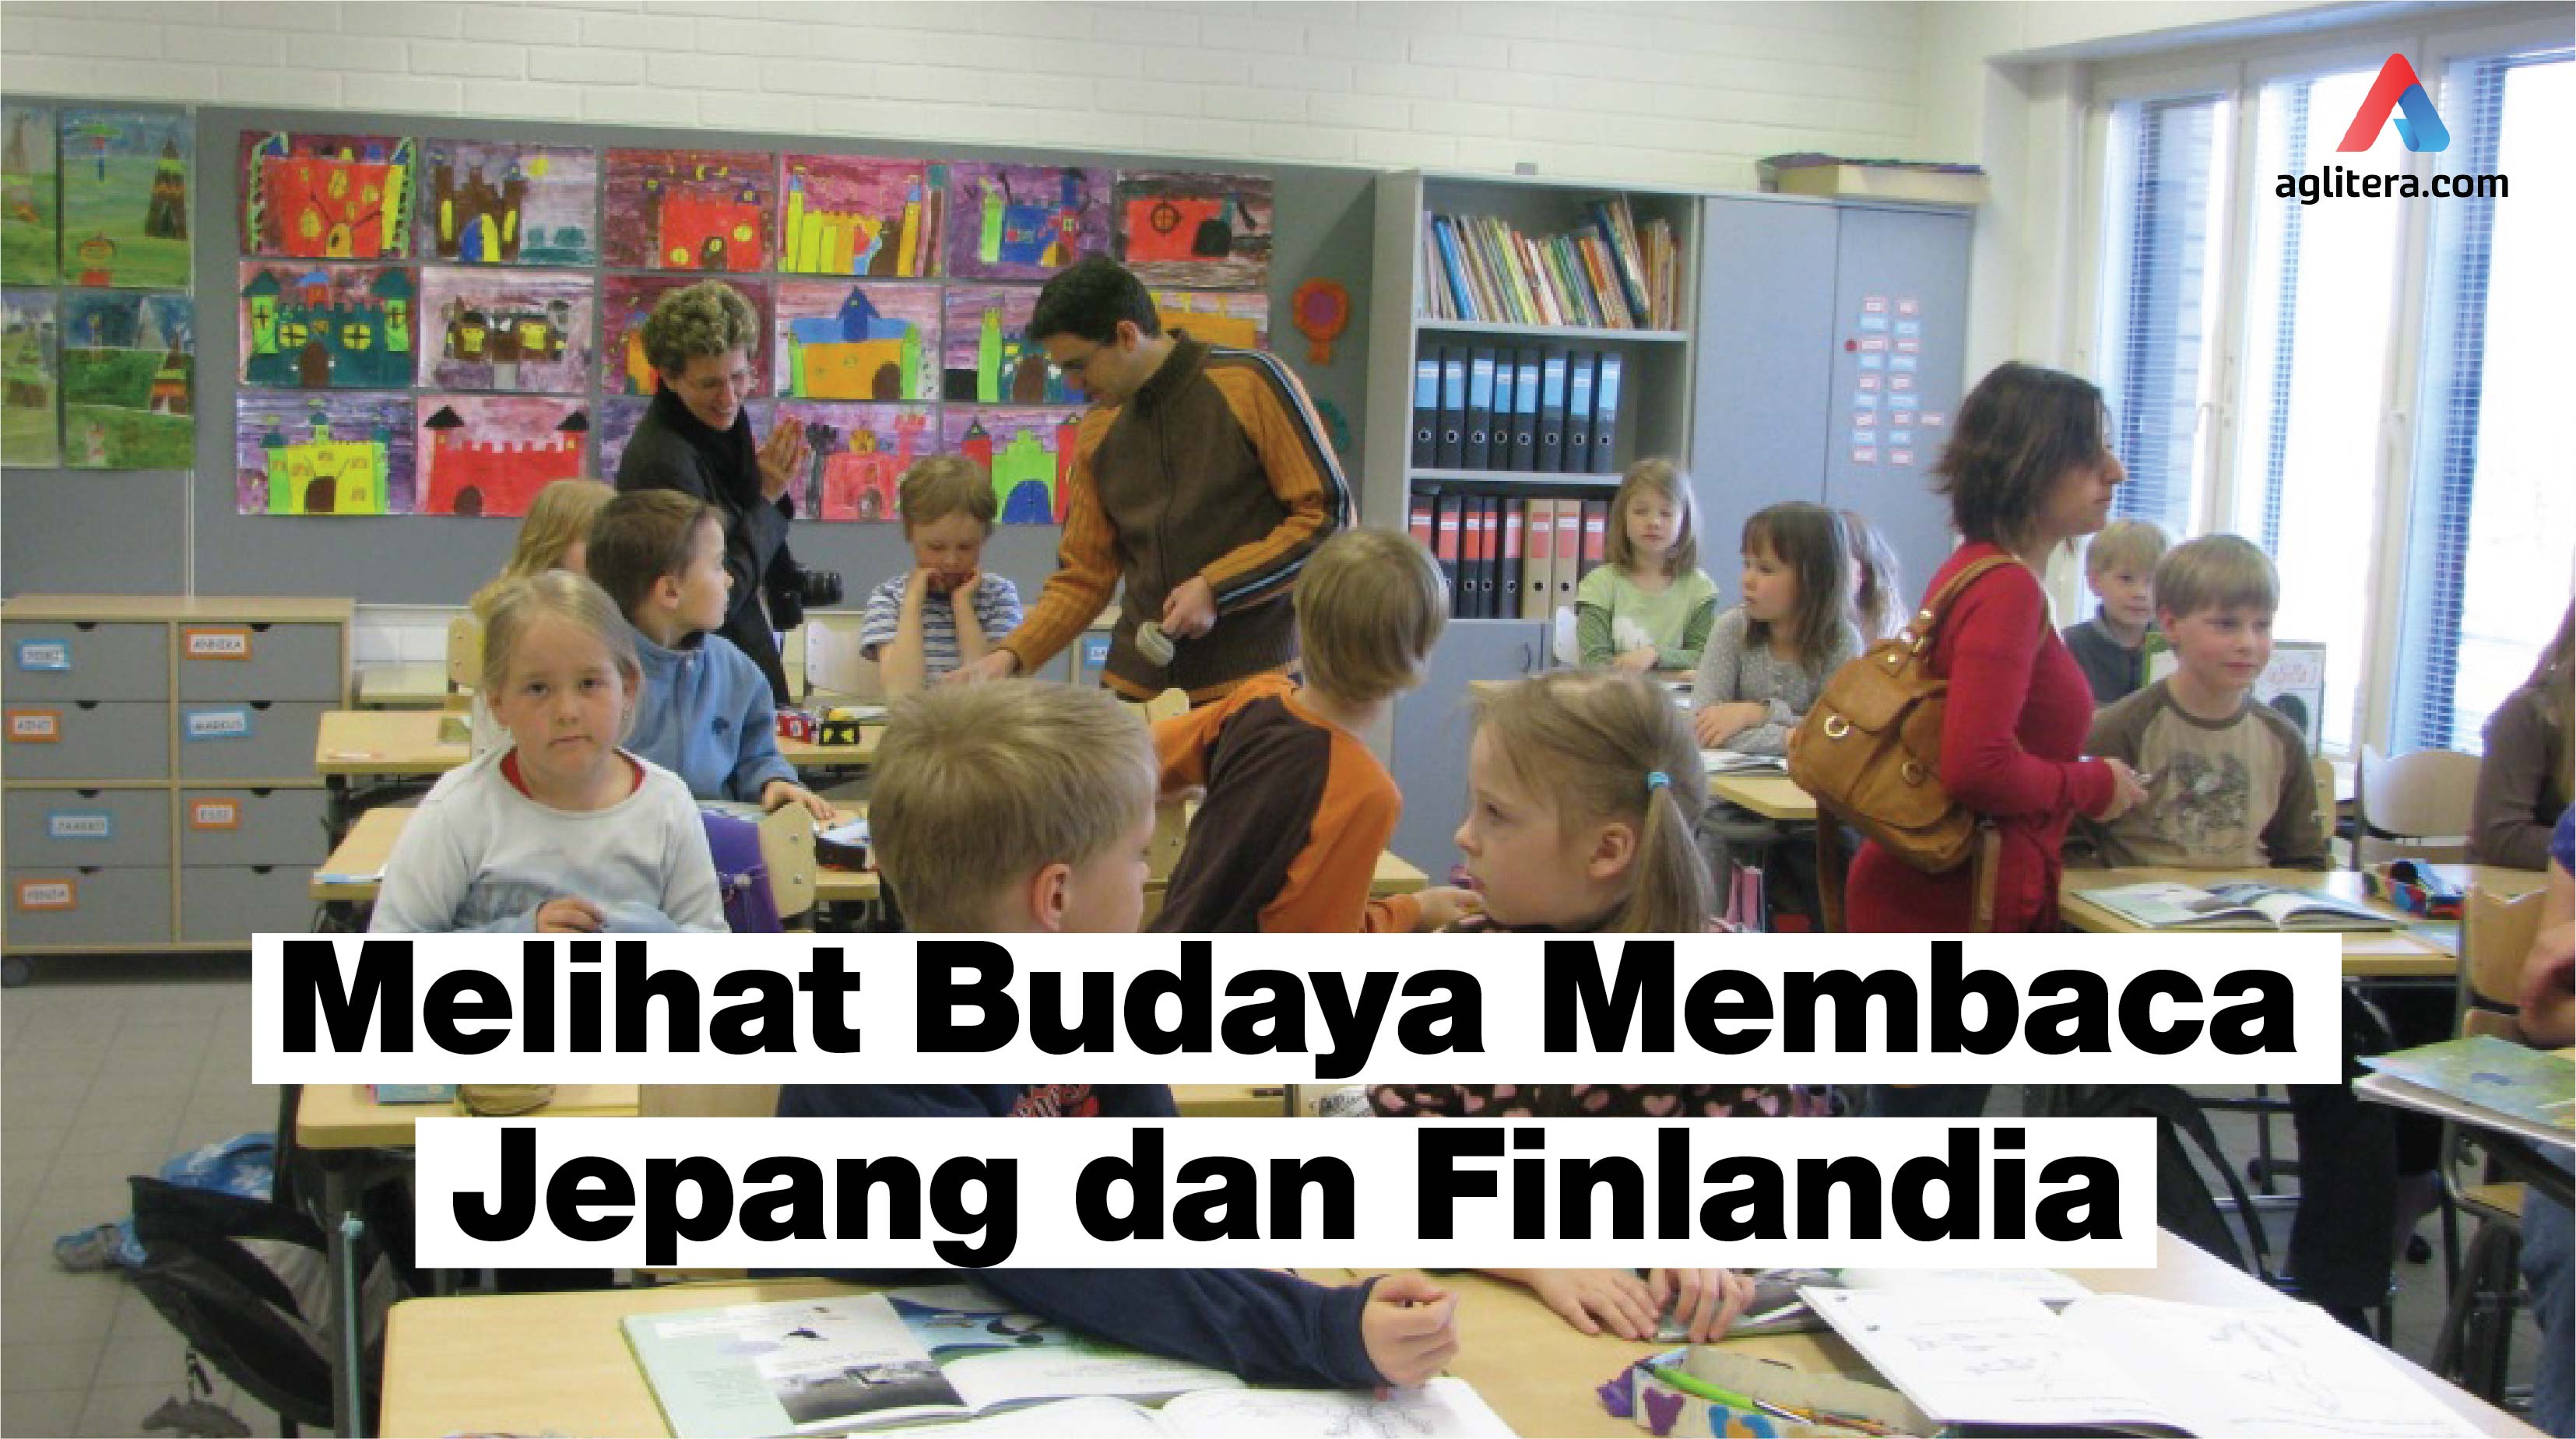 Melihat Budaya Membaca Jepang dan Finlandia